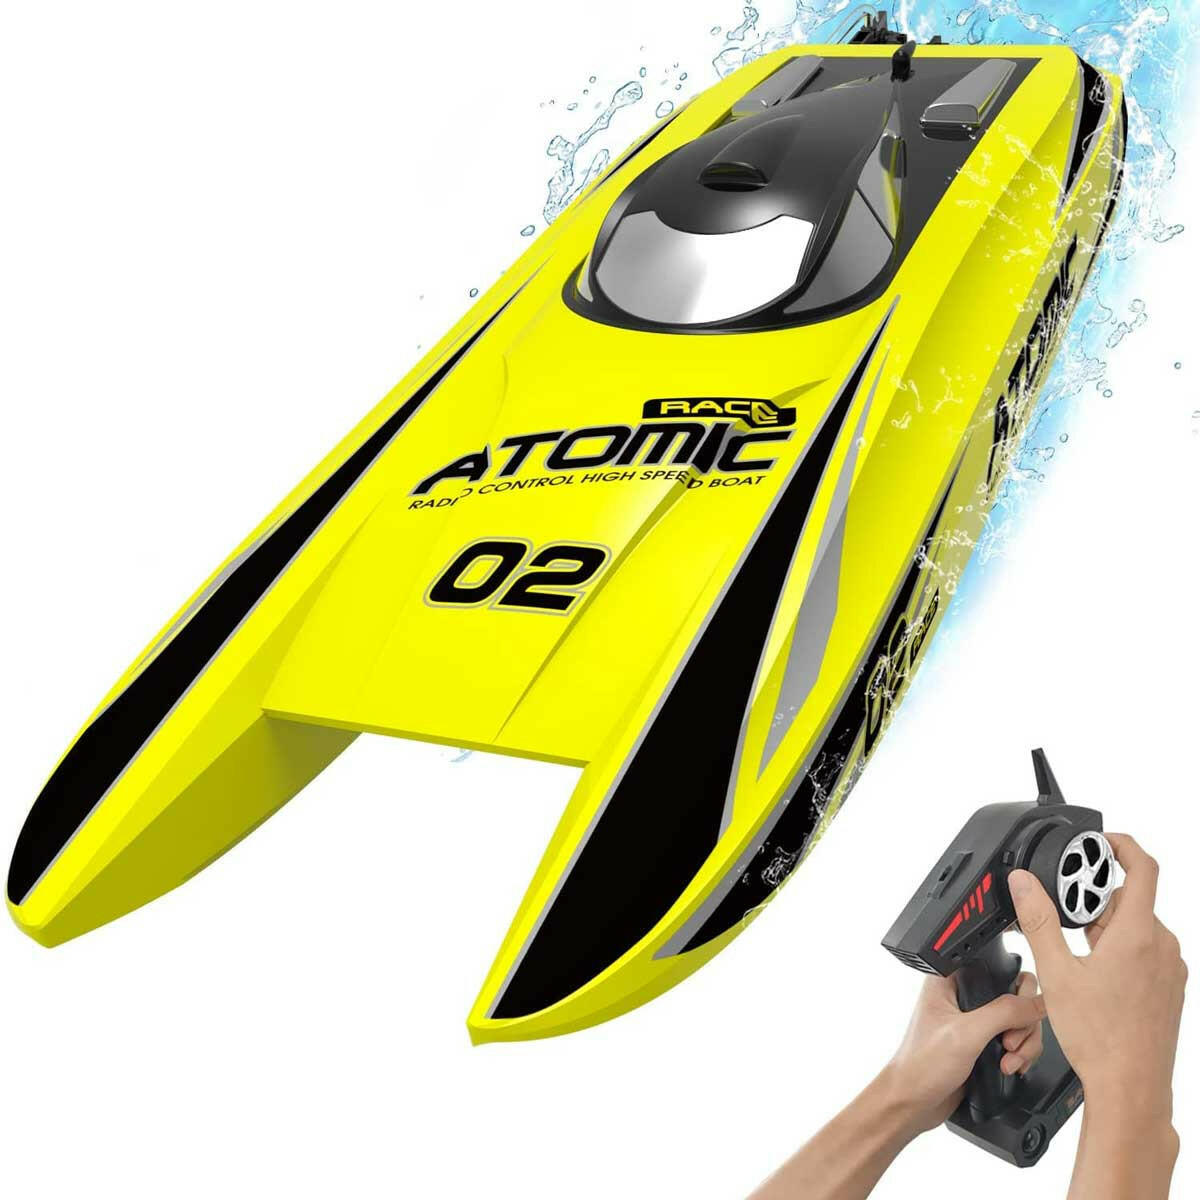 Atomic 45 mph alta velocidad Lake Racing Control remoto barco RC (792-4) RTR